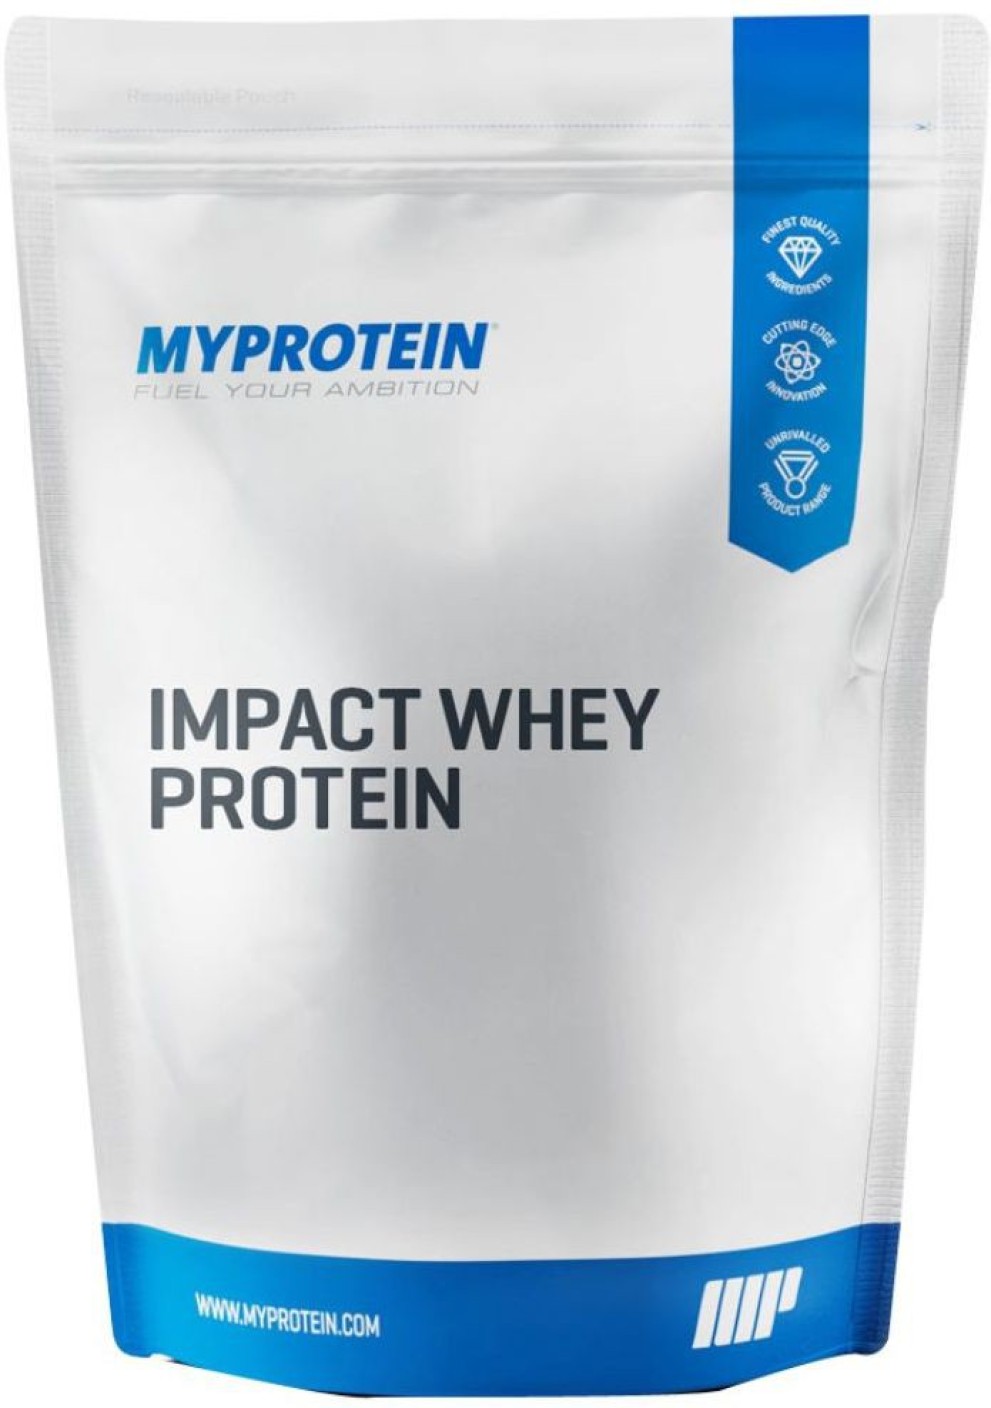 Myprotein Impact Whey Protein - 5kg Whey Protein Price in India - Buy